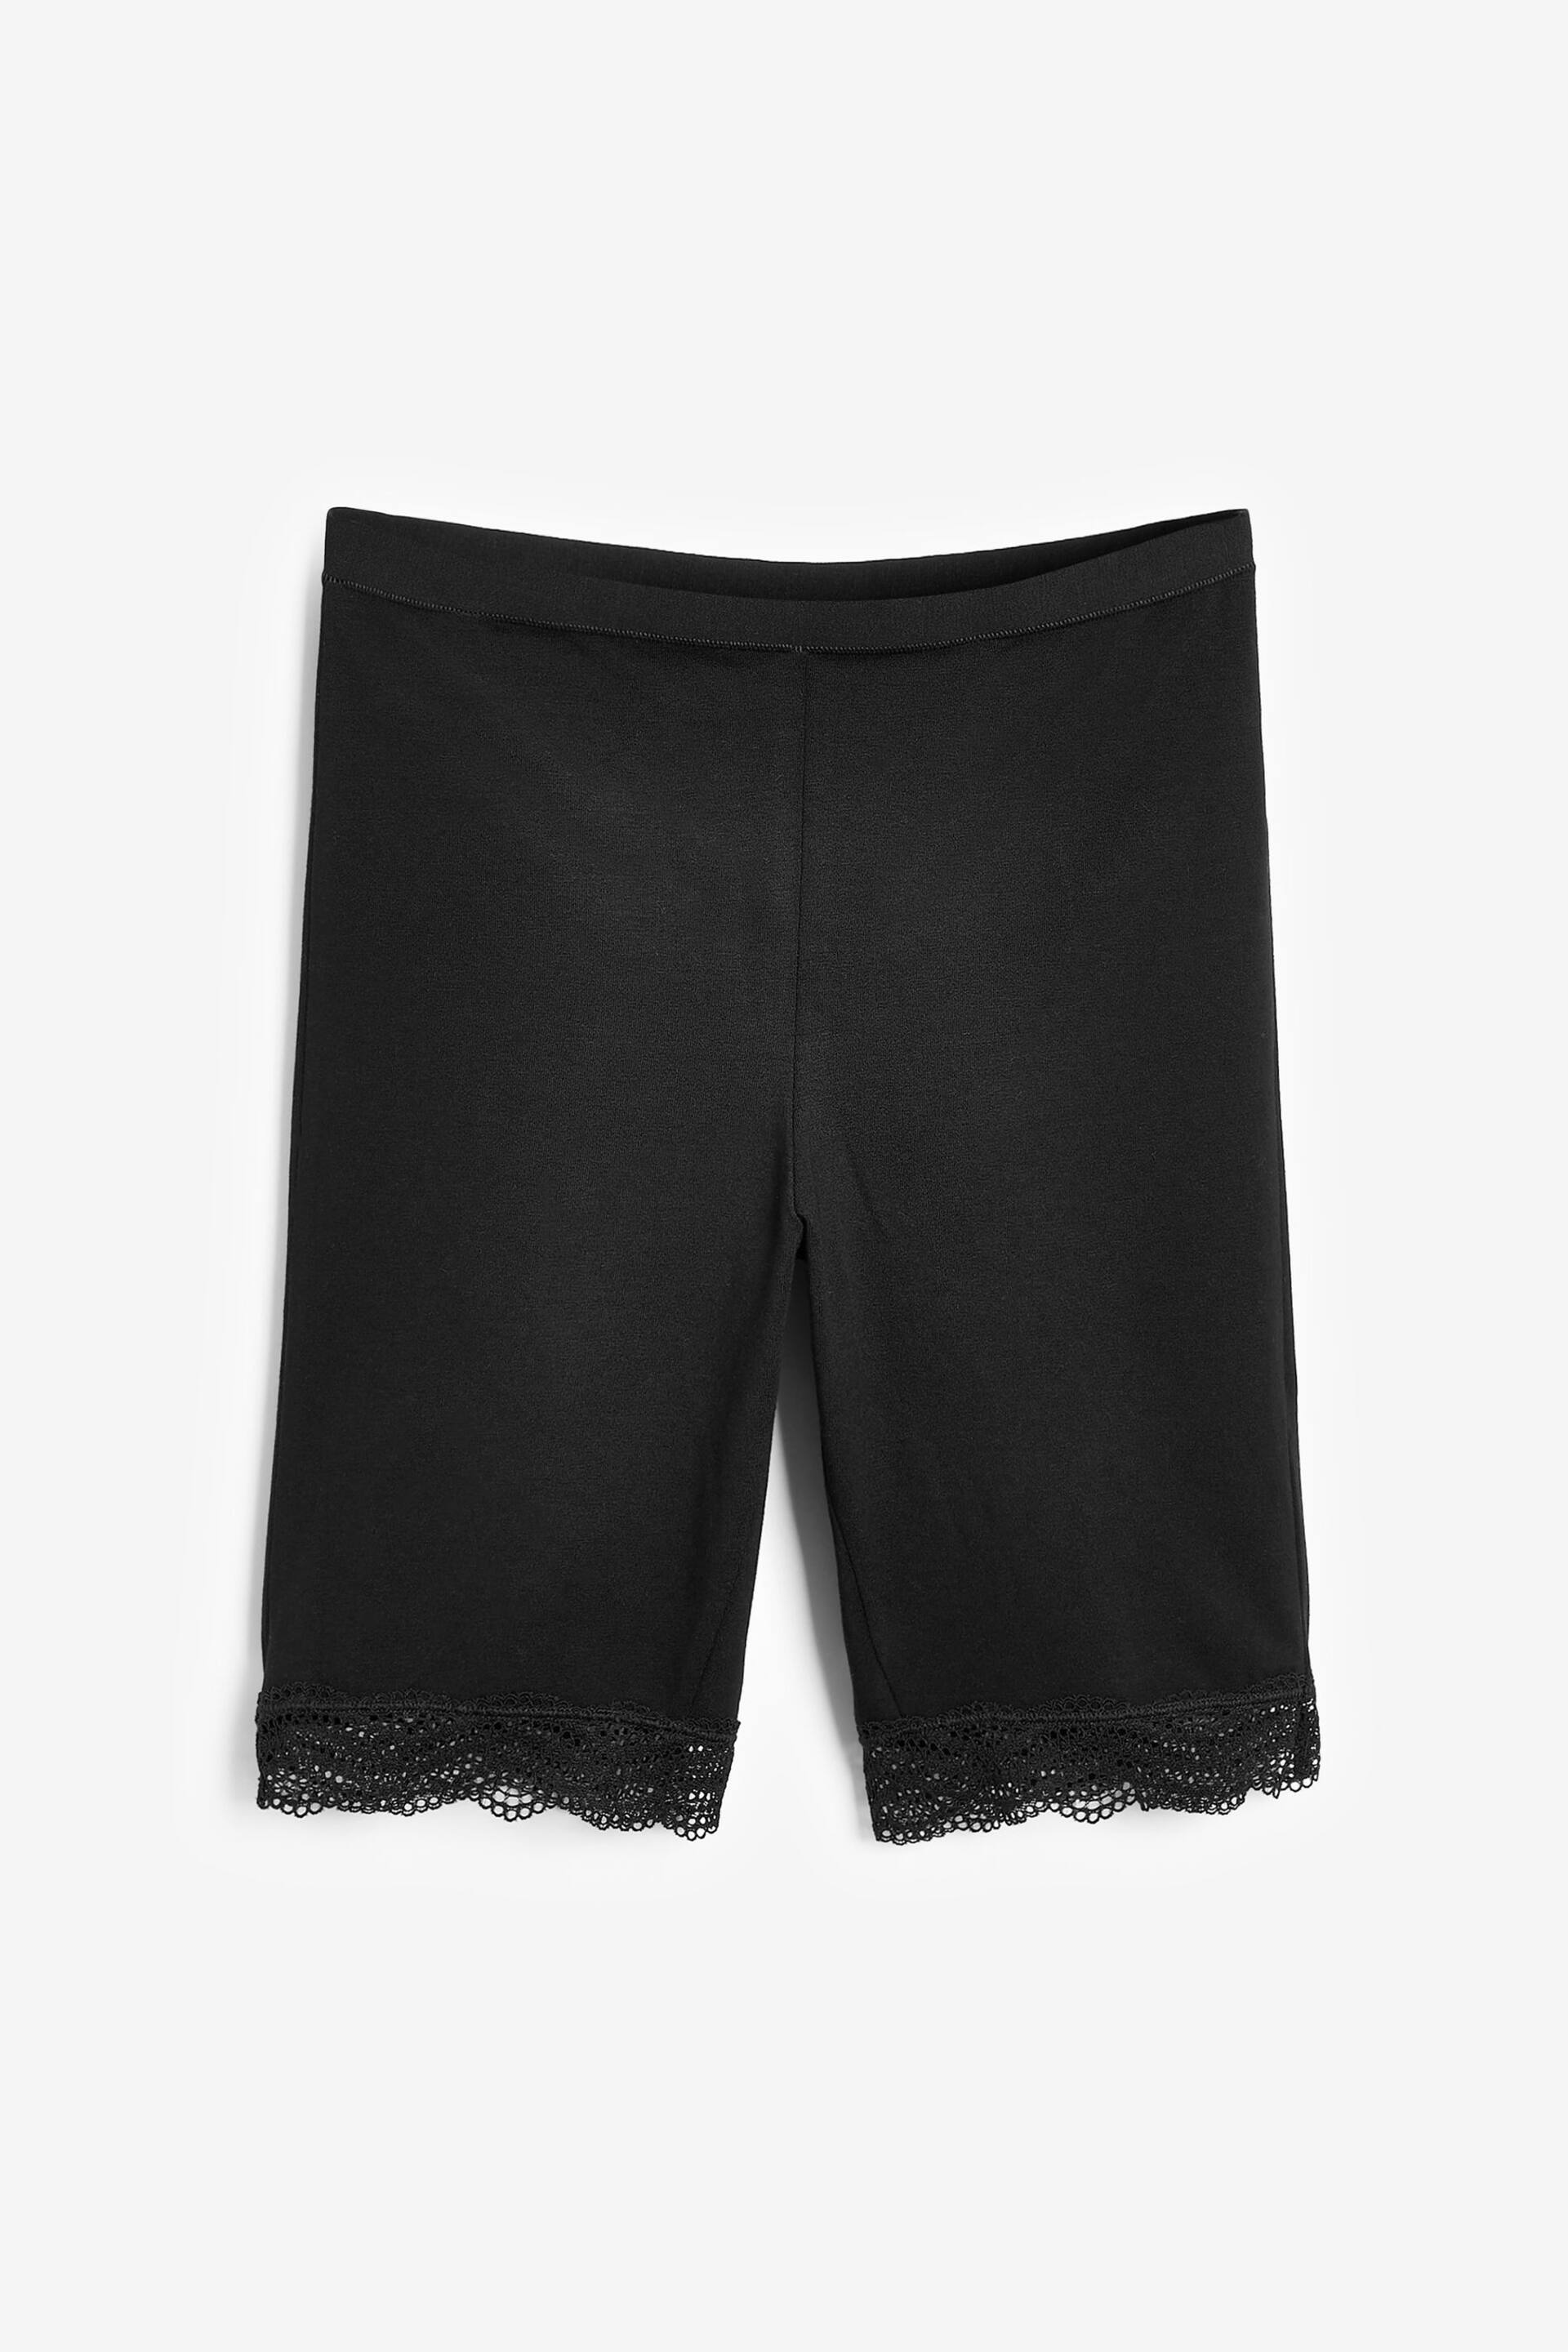 Black Cotton Blend Anti-Chafe Shorts 2 Pack - Image 3 of 6